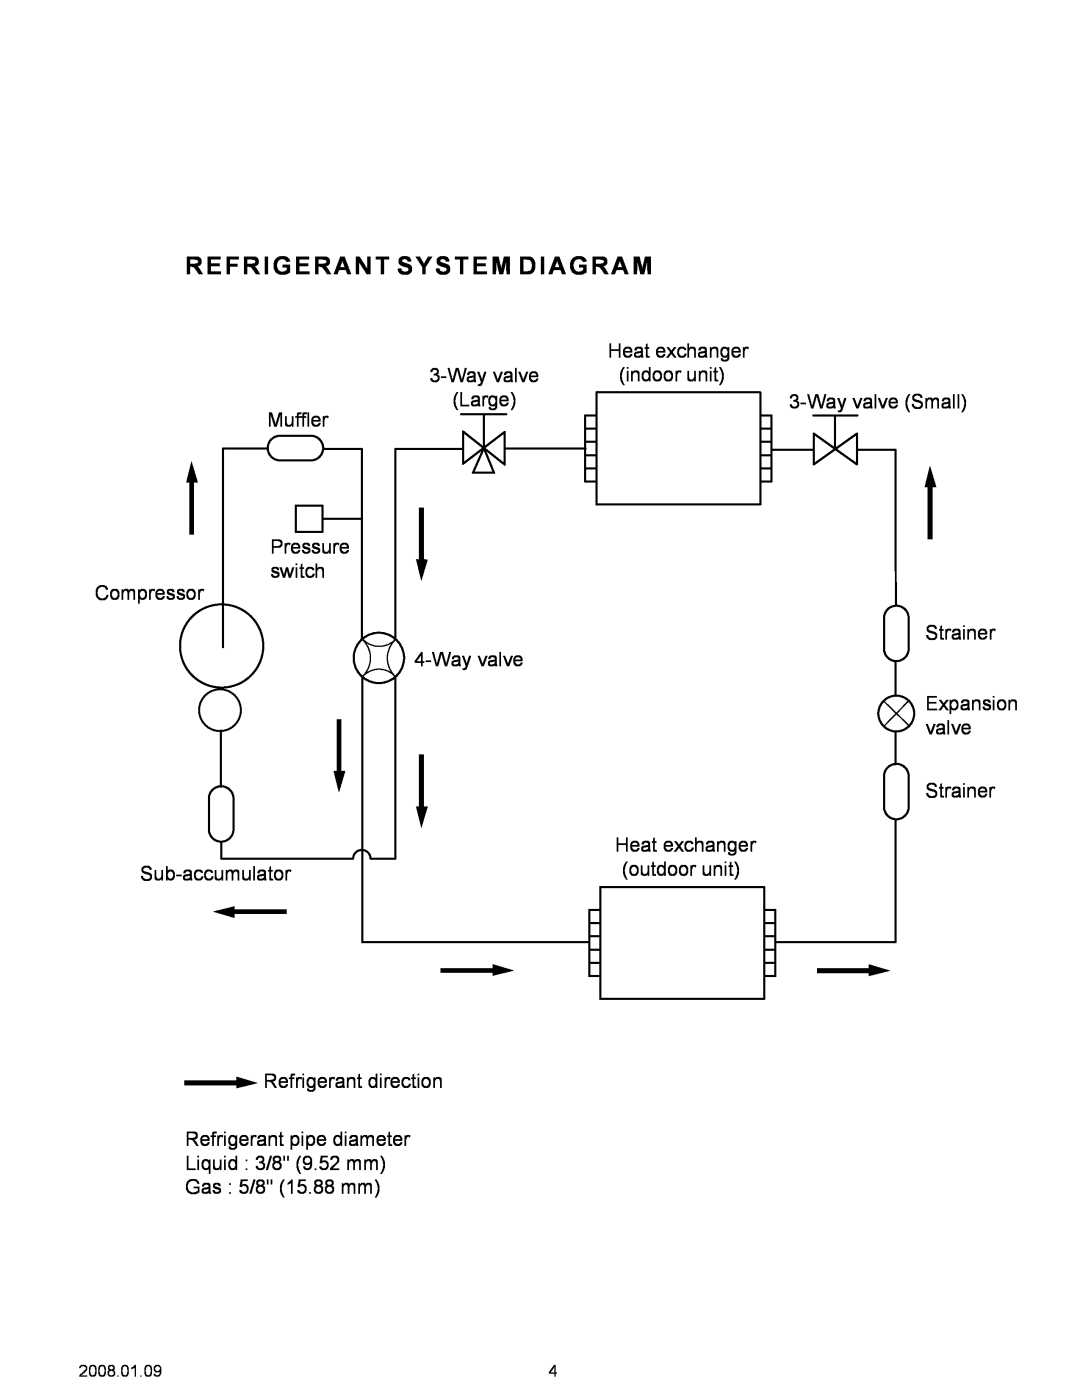 Friedrich MW30C3F Refrigerant System Diagram, Heat exchanger 3-Wayvalve indoor unit Large, Sub-accumulator, outdoor unit 